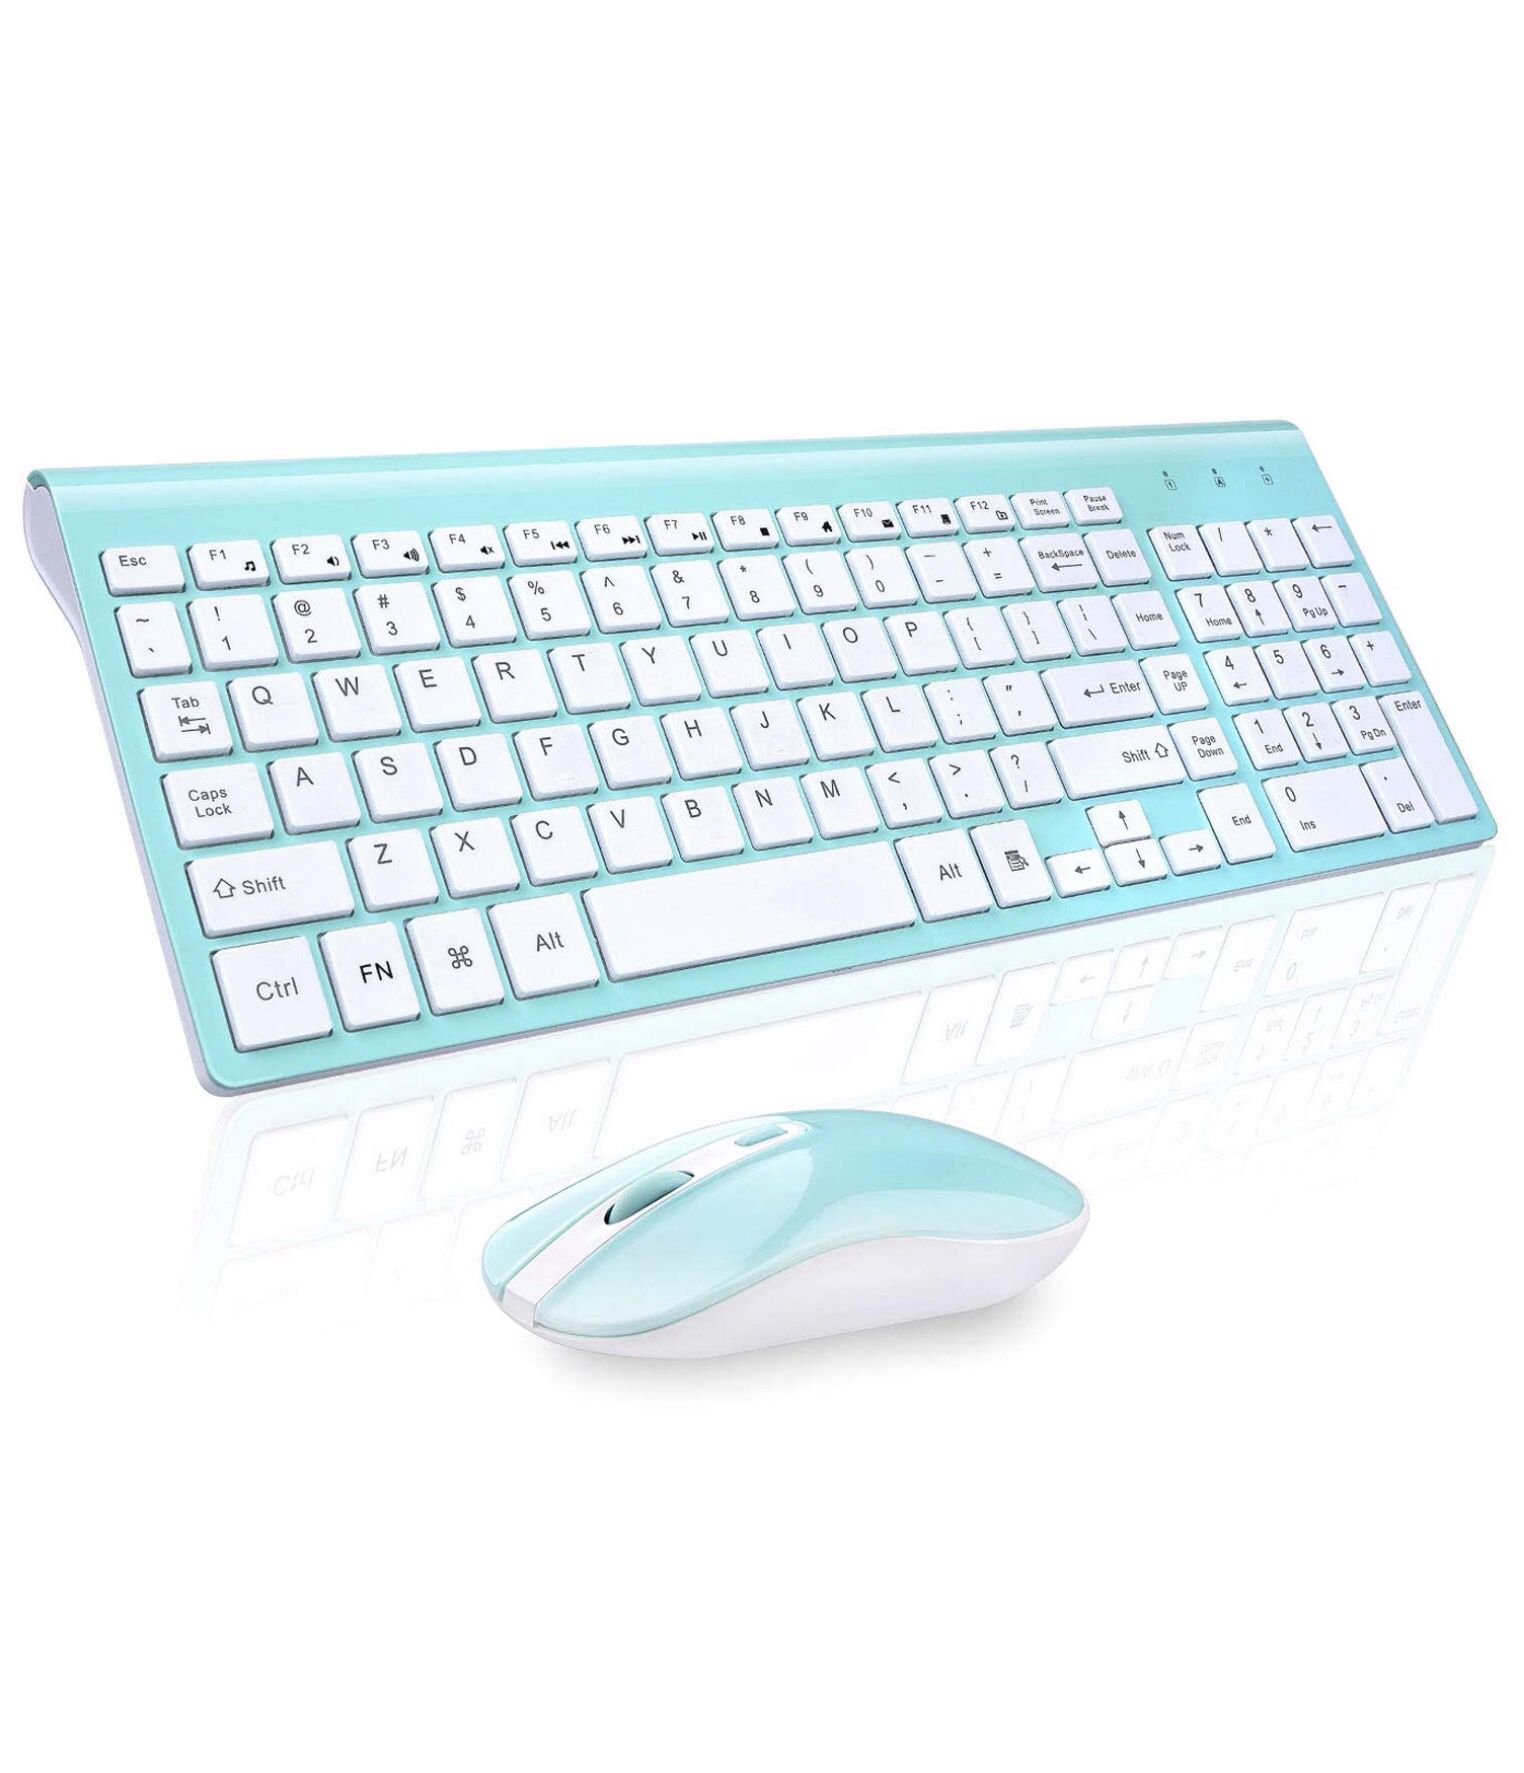 Cimetech Wireless Keyboard & Mouse - 3B